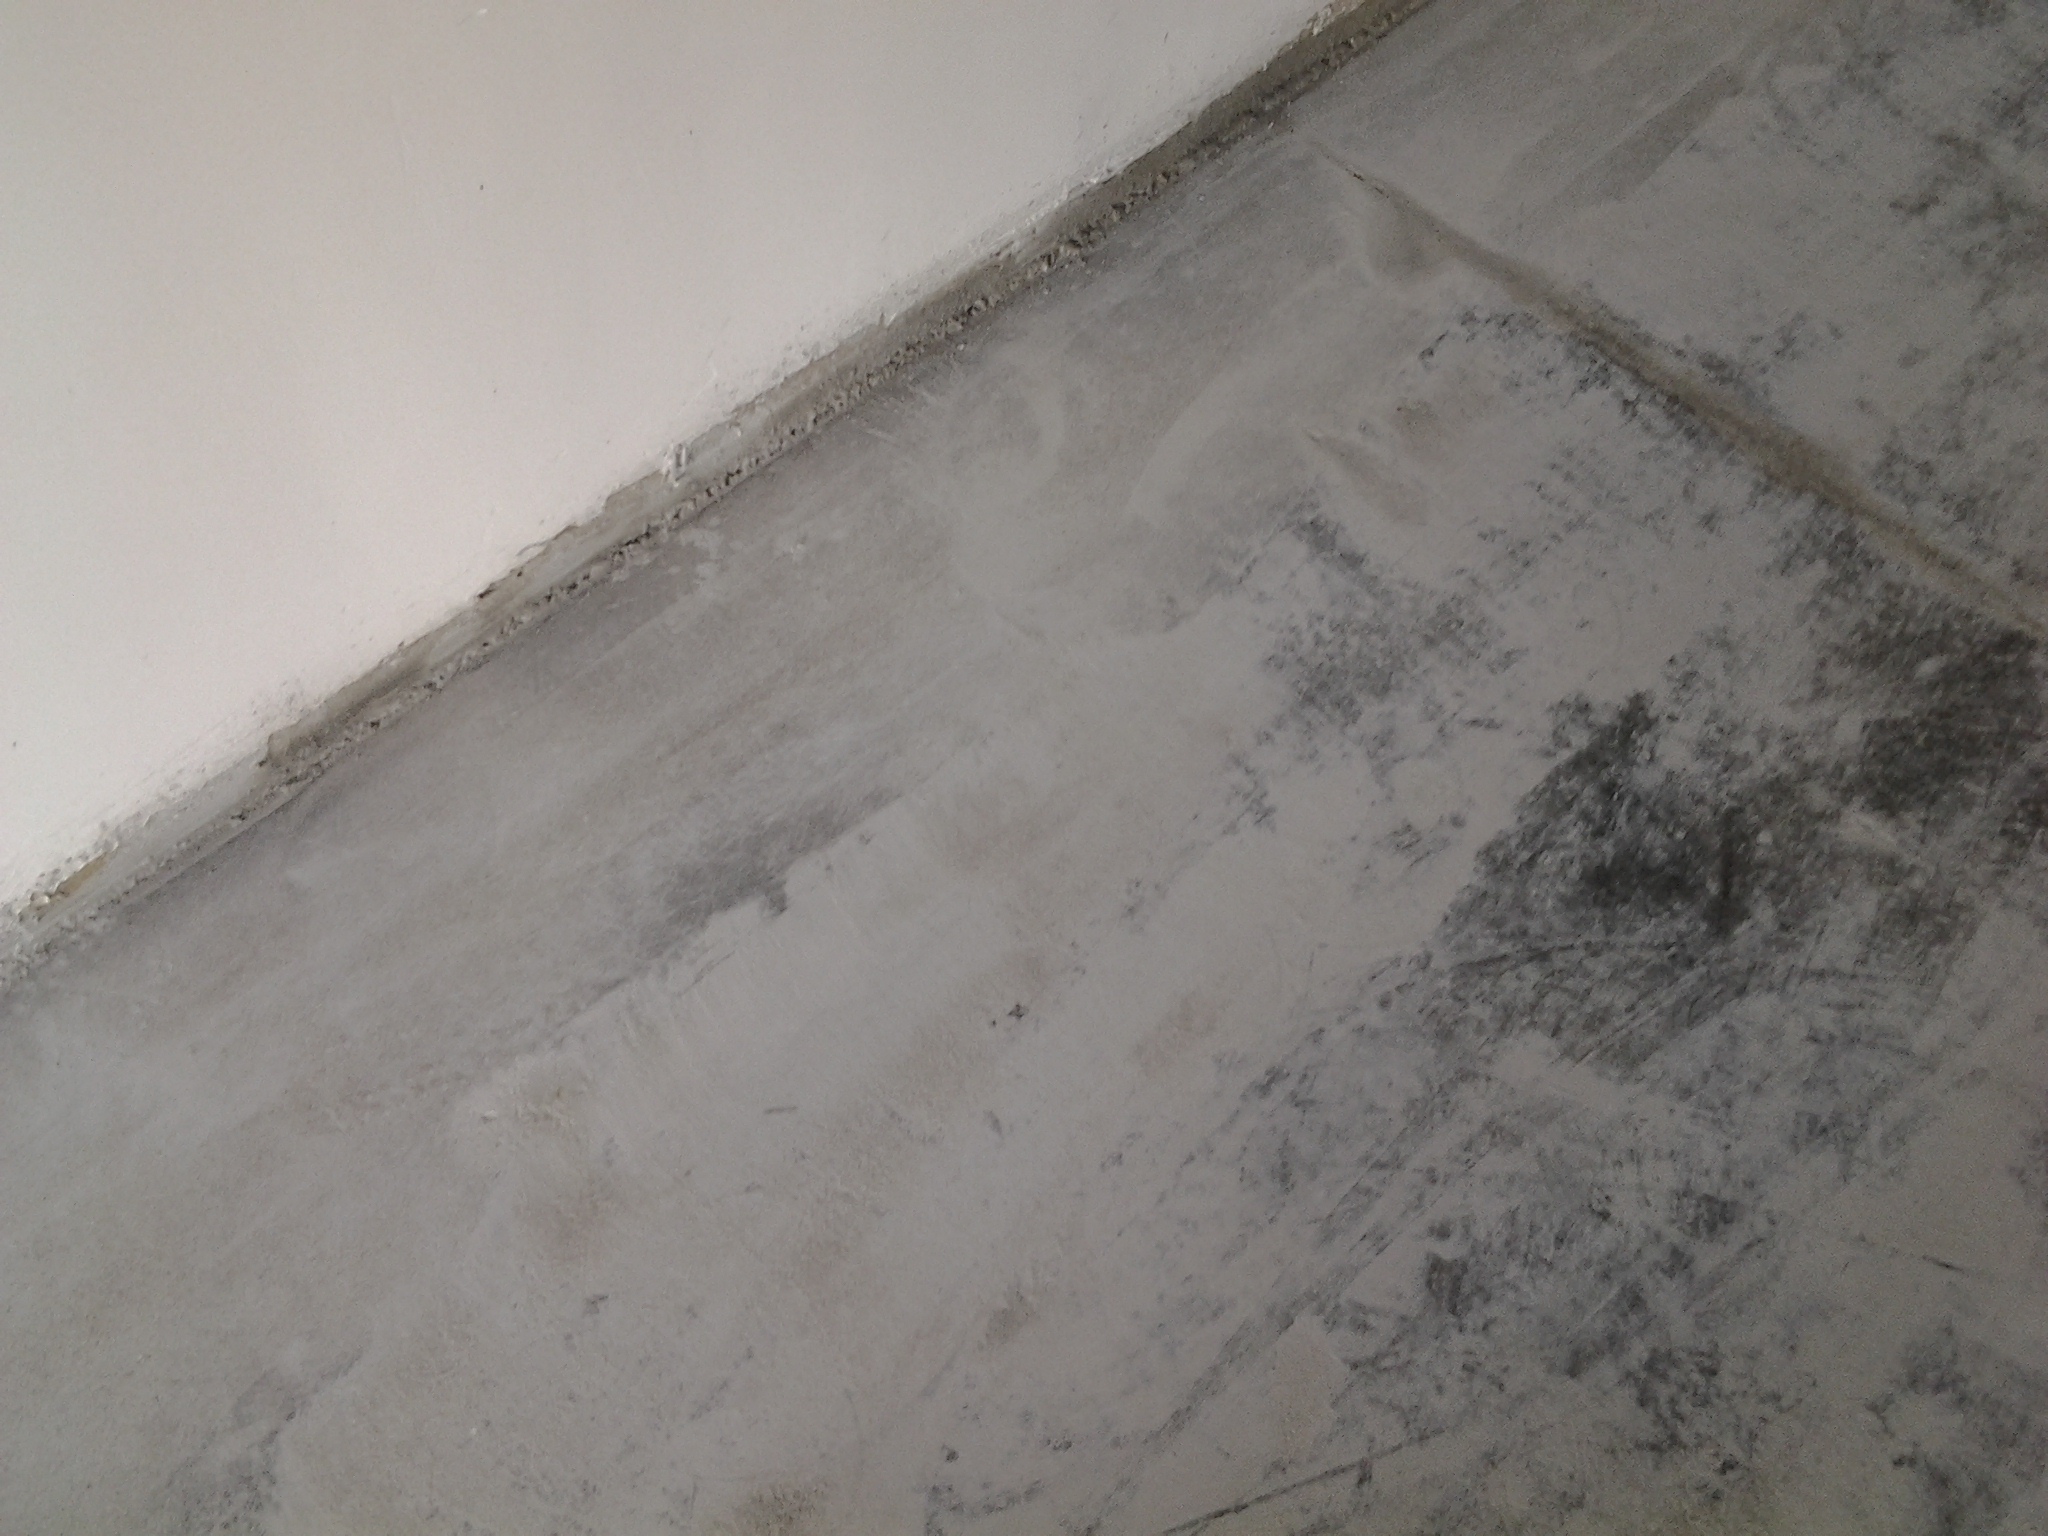 After floor preparation: Tile grout removal in Cedar Rapids, IA